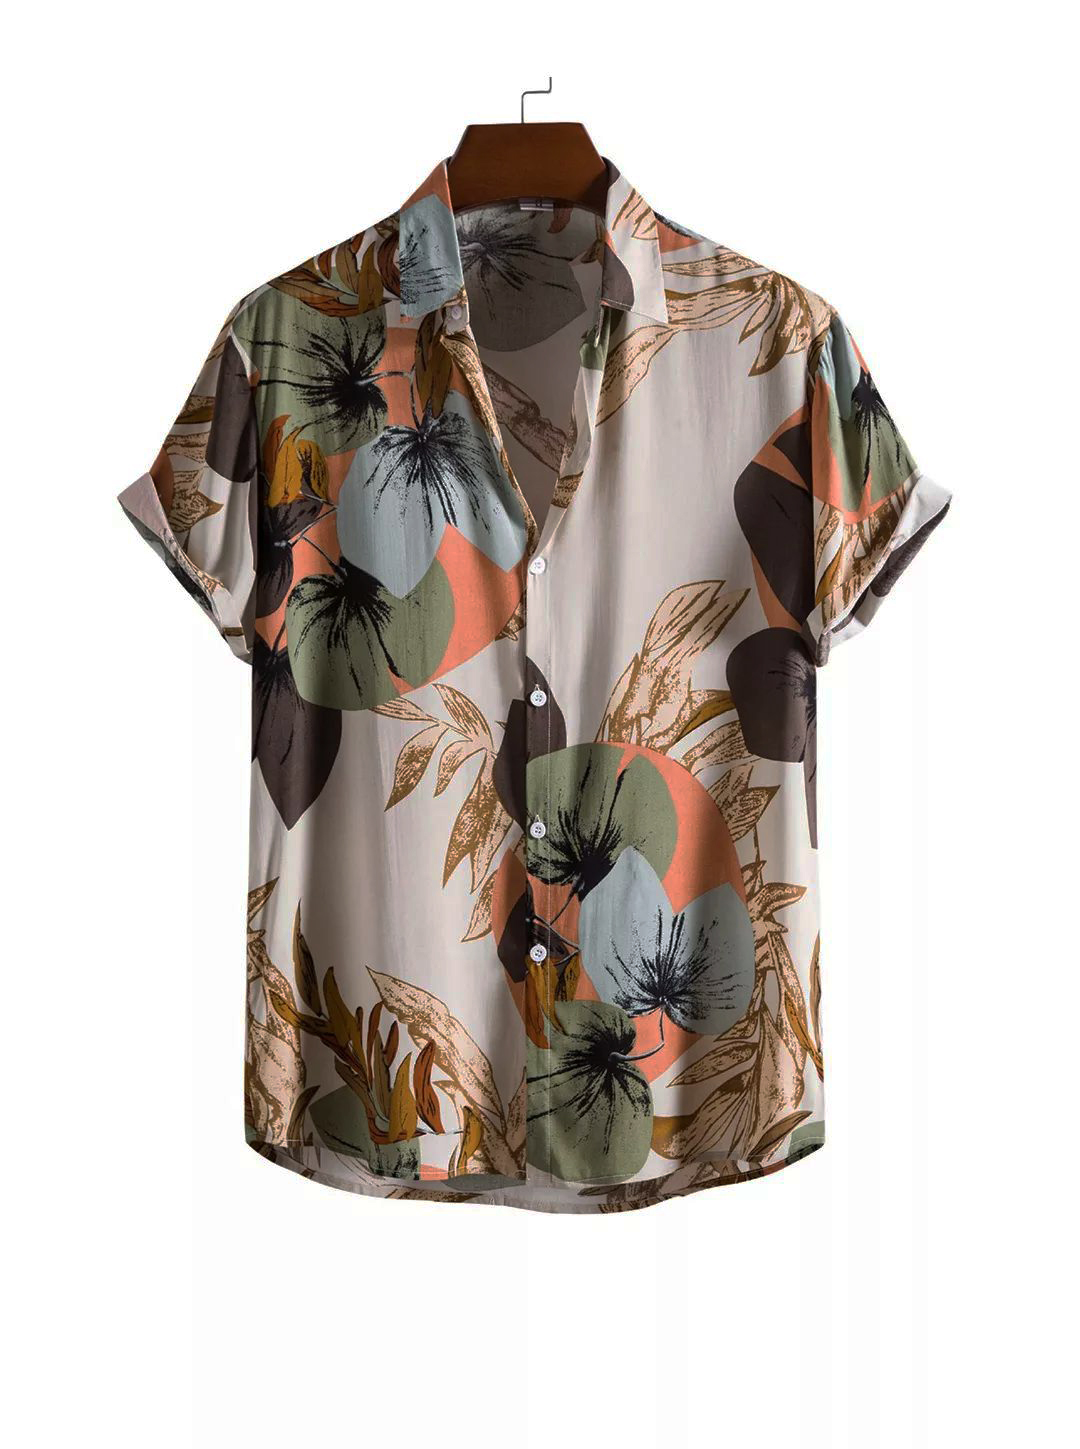 Poisonstreetwear Men's Floral Print Beach Shirt Short Sleeve Casual Retro-poisonstreetwear.com